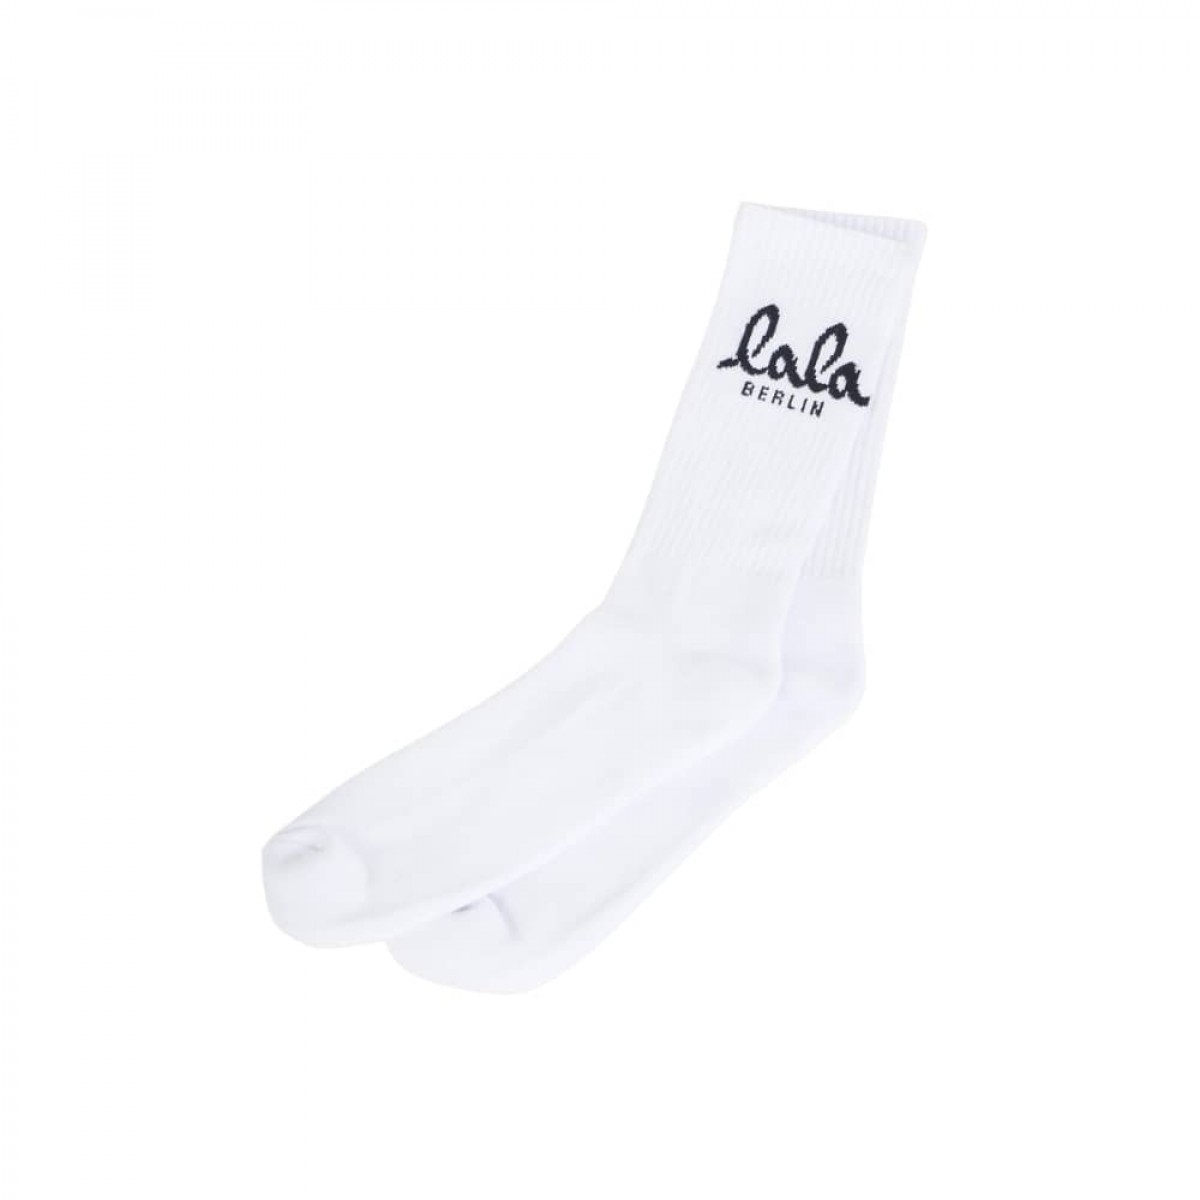 sanny socks logo - black - front 